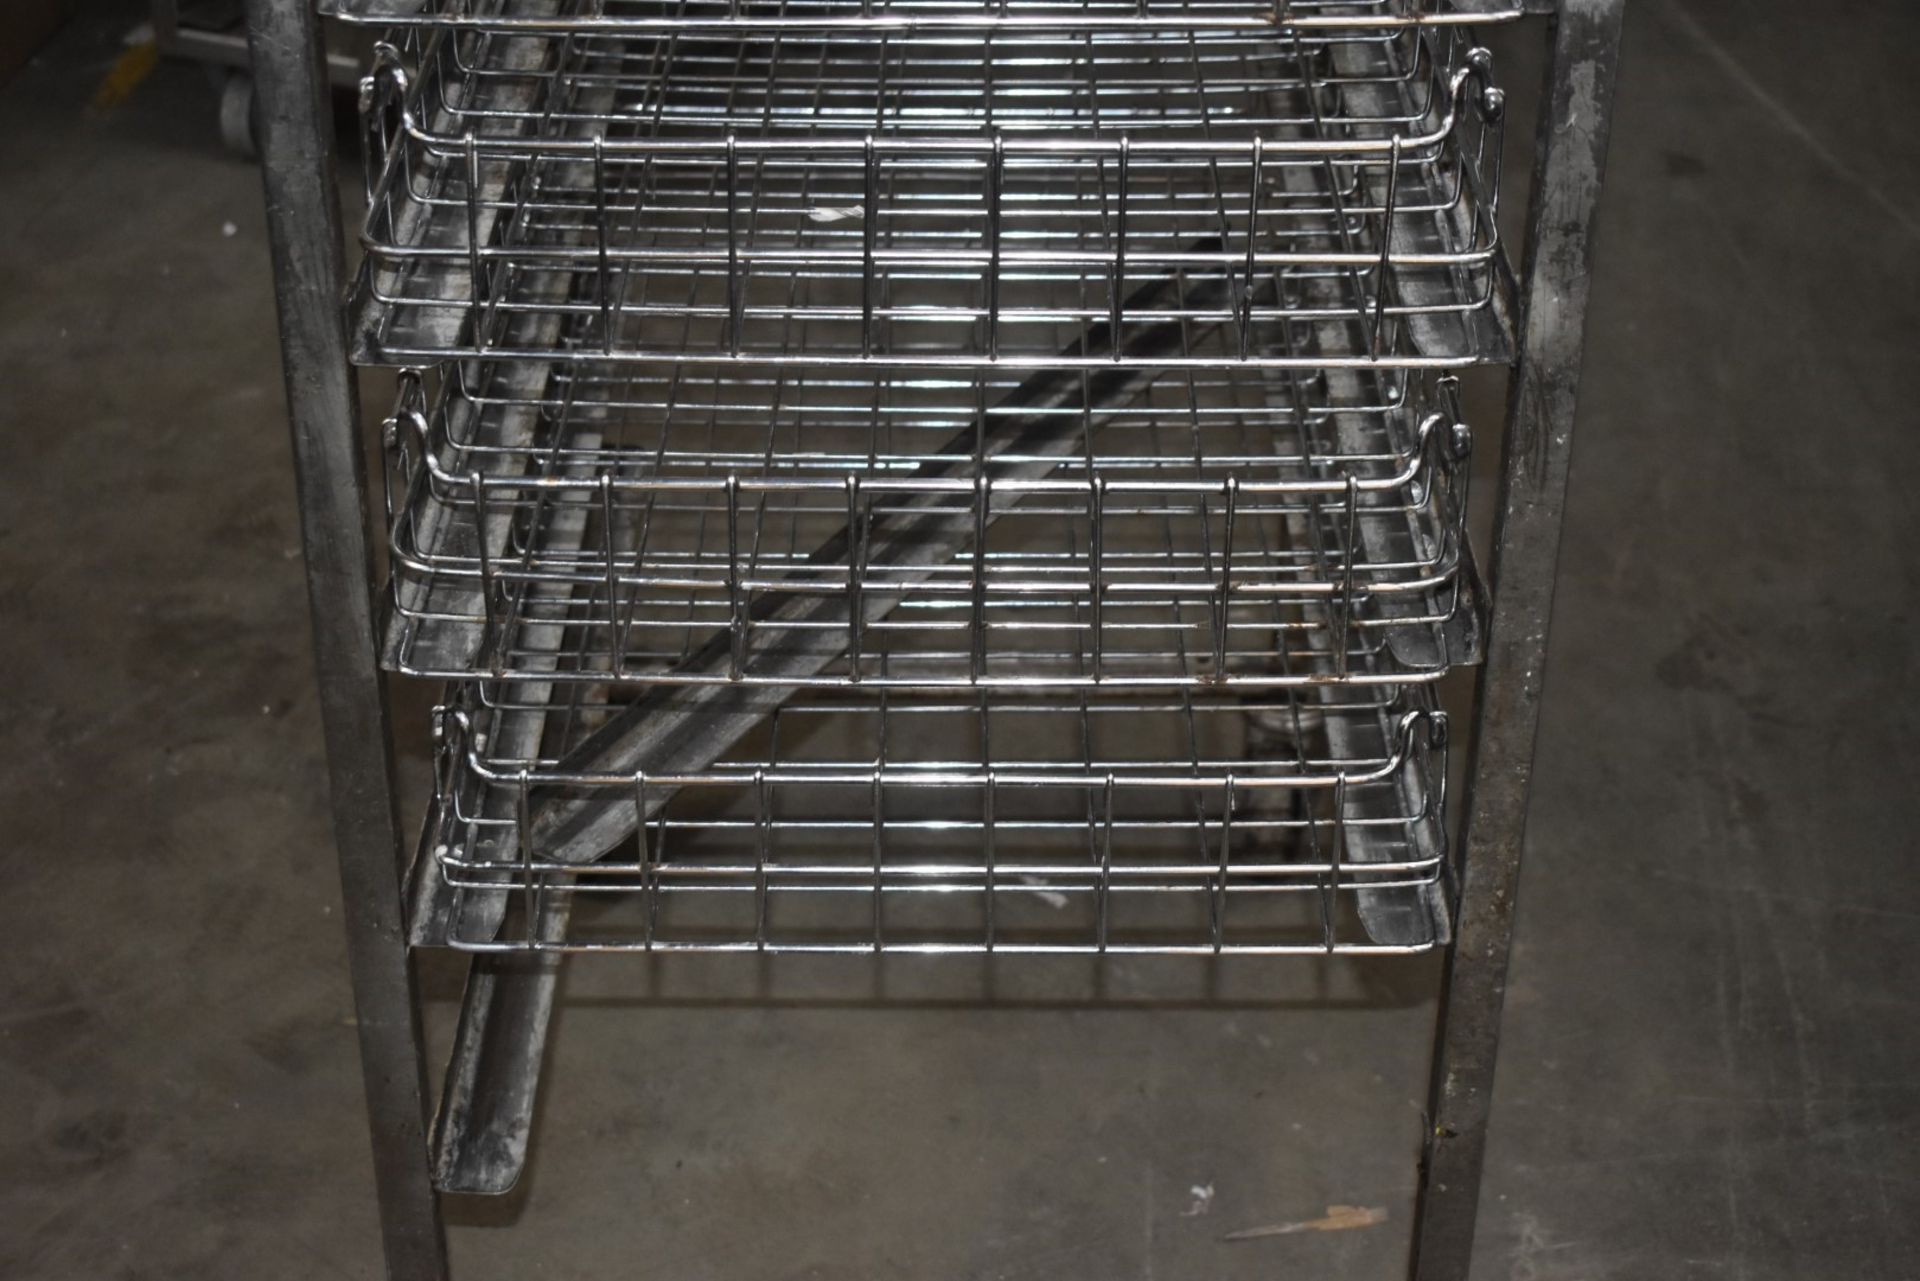 1 x Upright Mobile 10 Tier Shelf Rack With 9 x Chrome Storage Baskets - Dimensions: H180 x W46 x D75 - Image 3 of 5